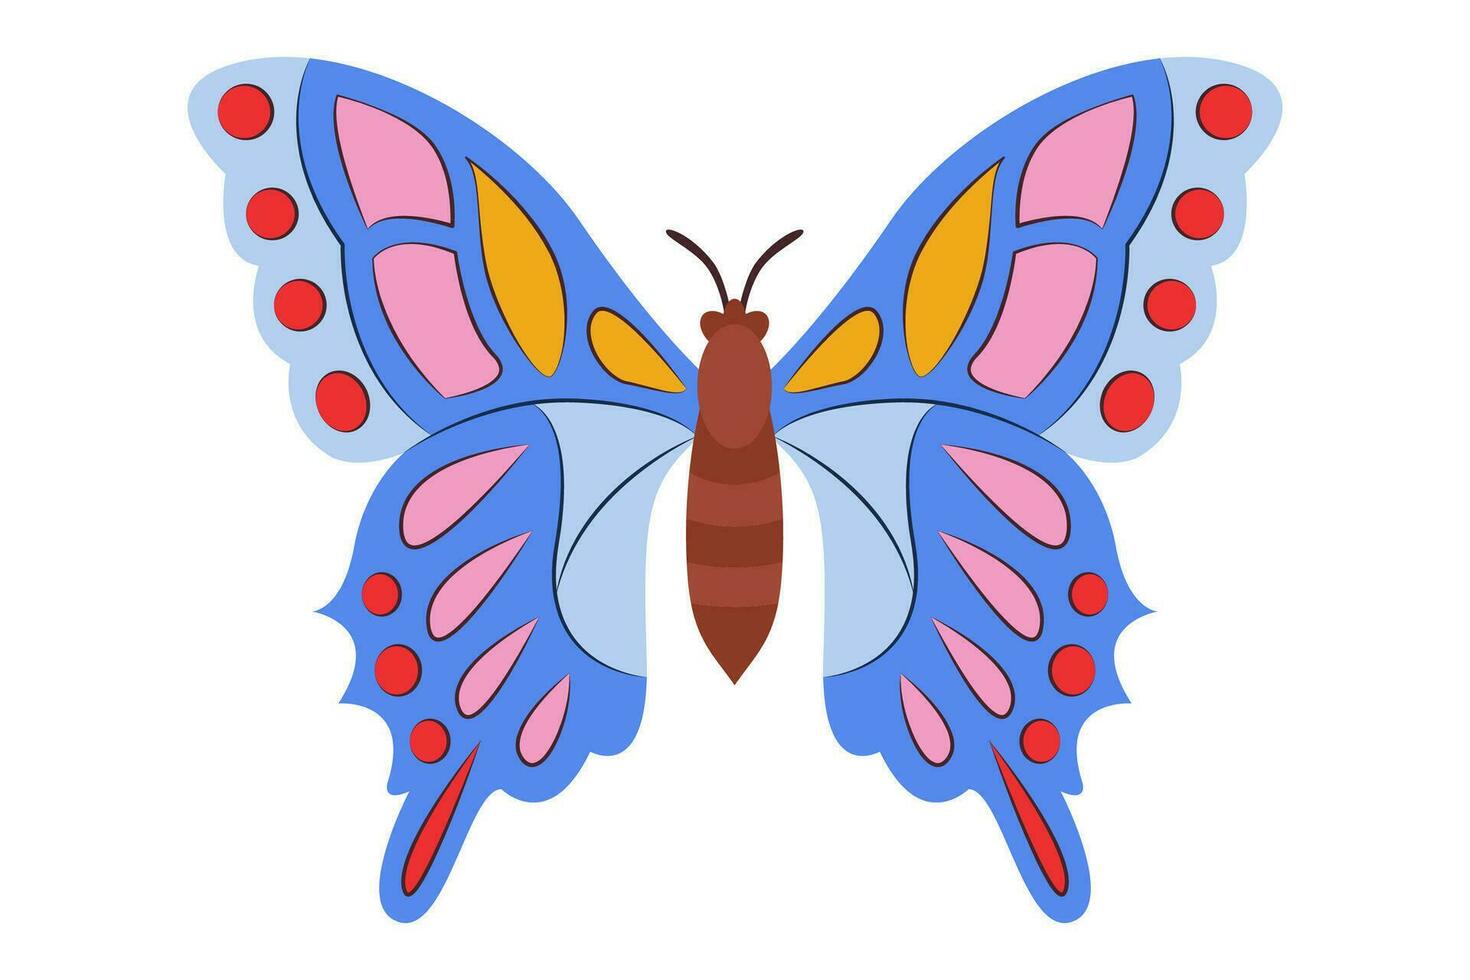 vistoso mariposa icono logo aislado. hermosa mariposa ilustración vector